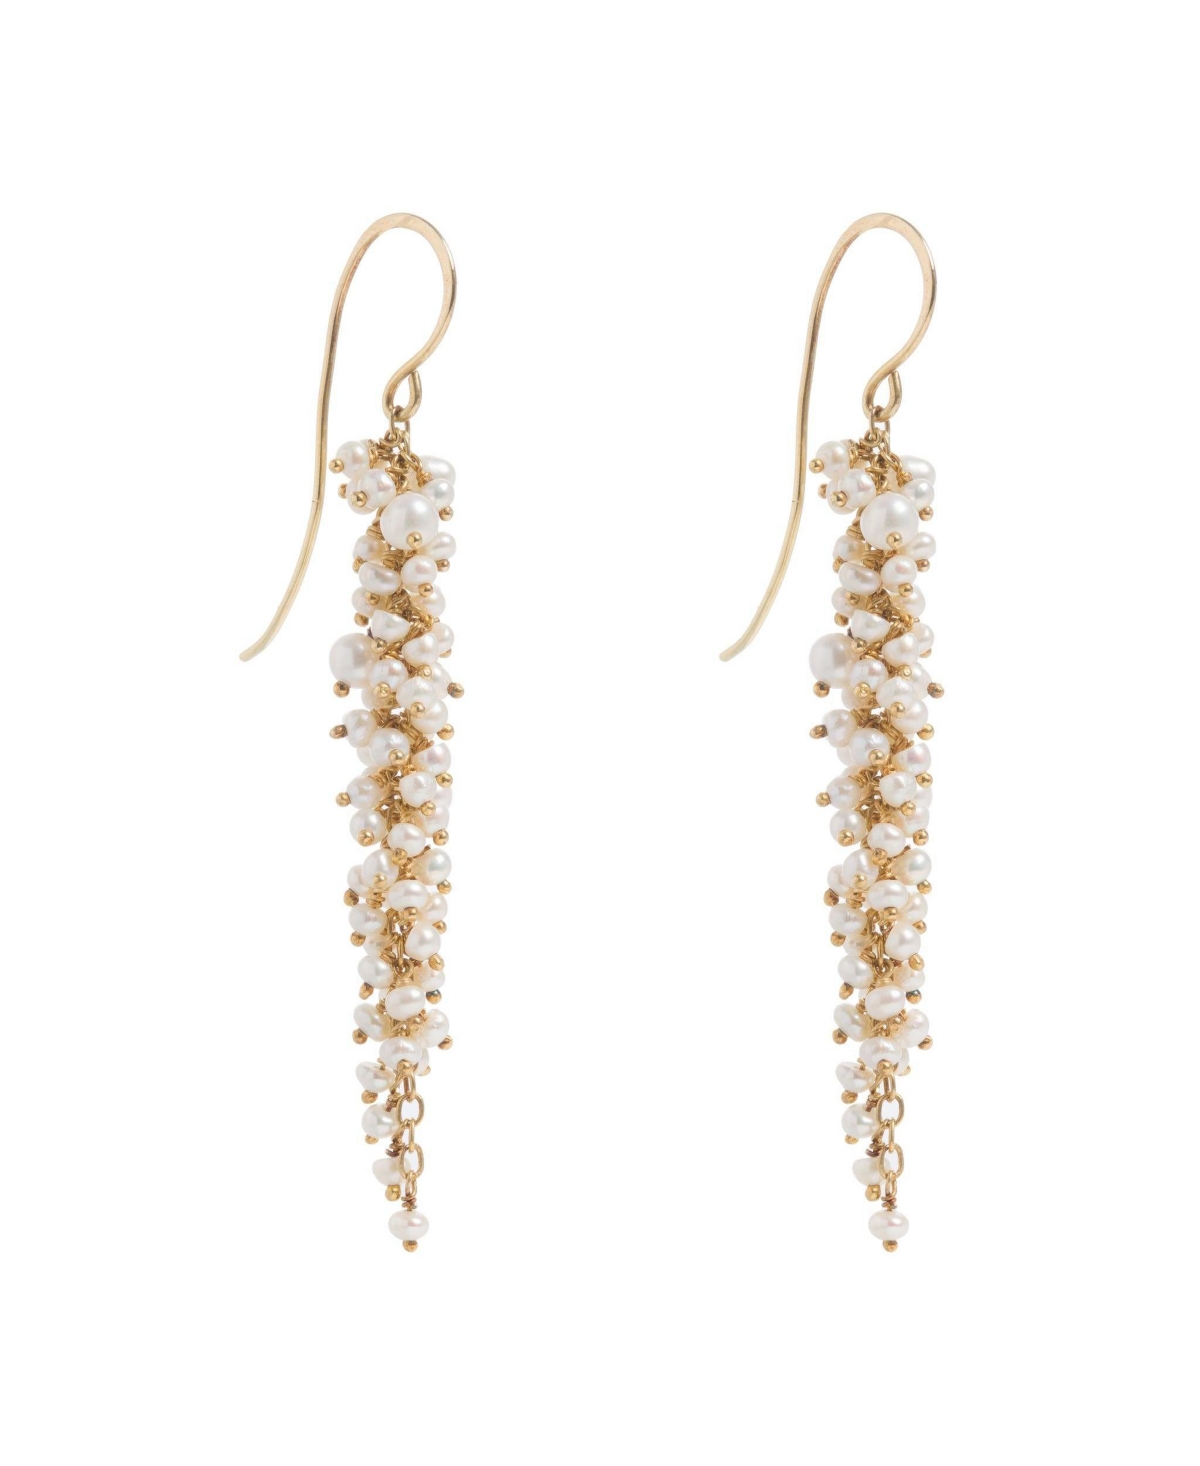 Delicate Gold Pearl Drops Earrings - Gold